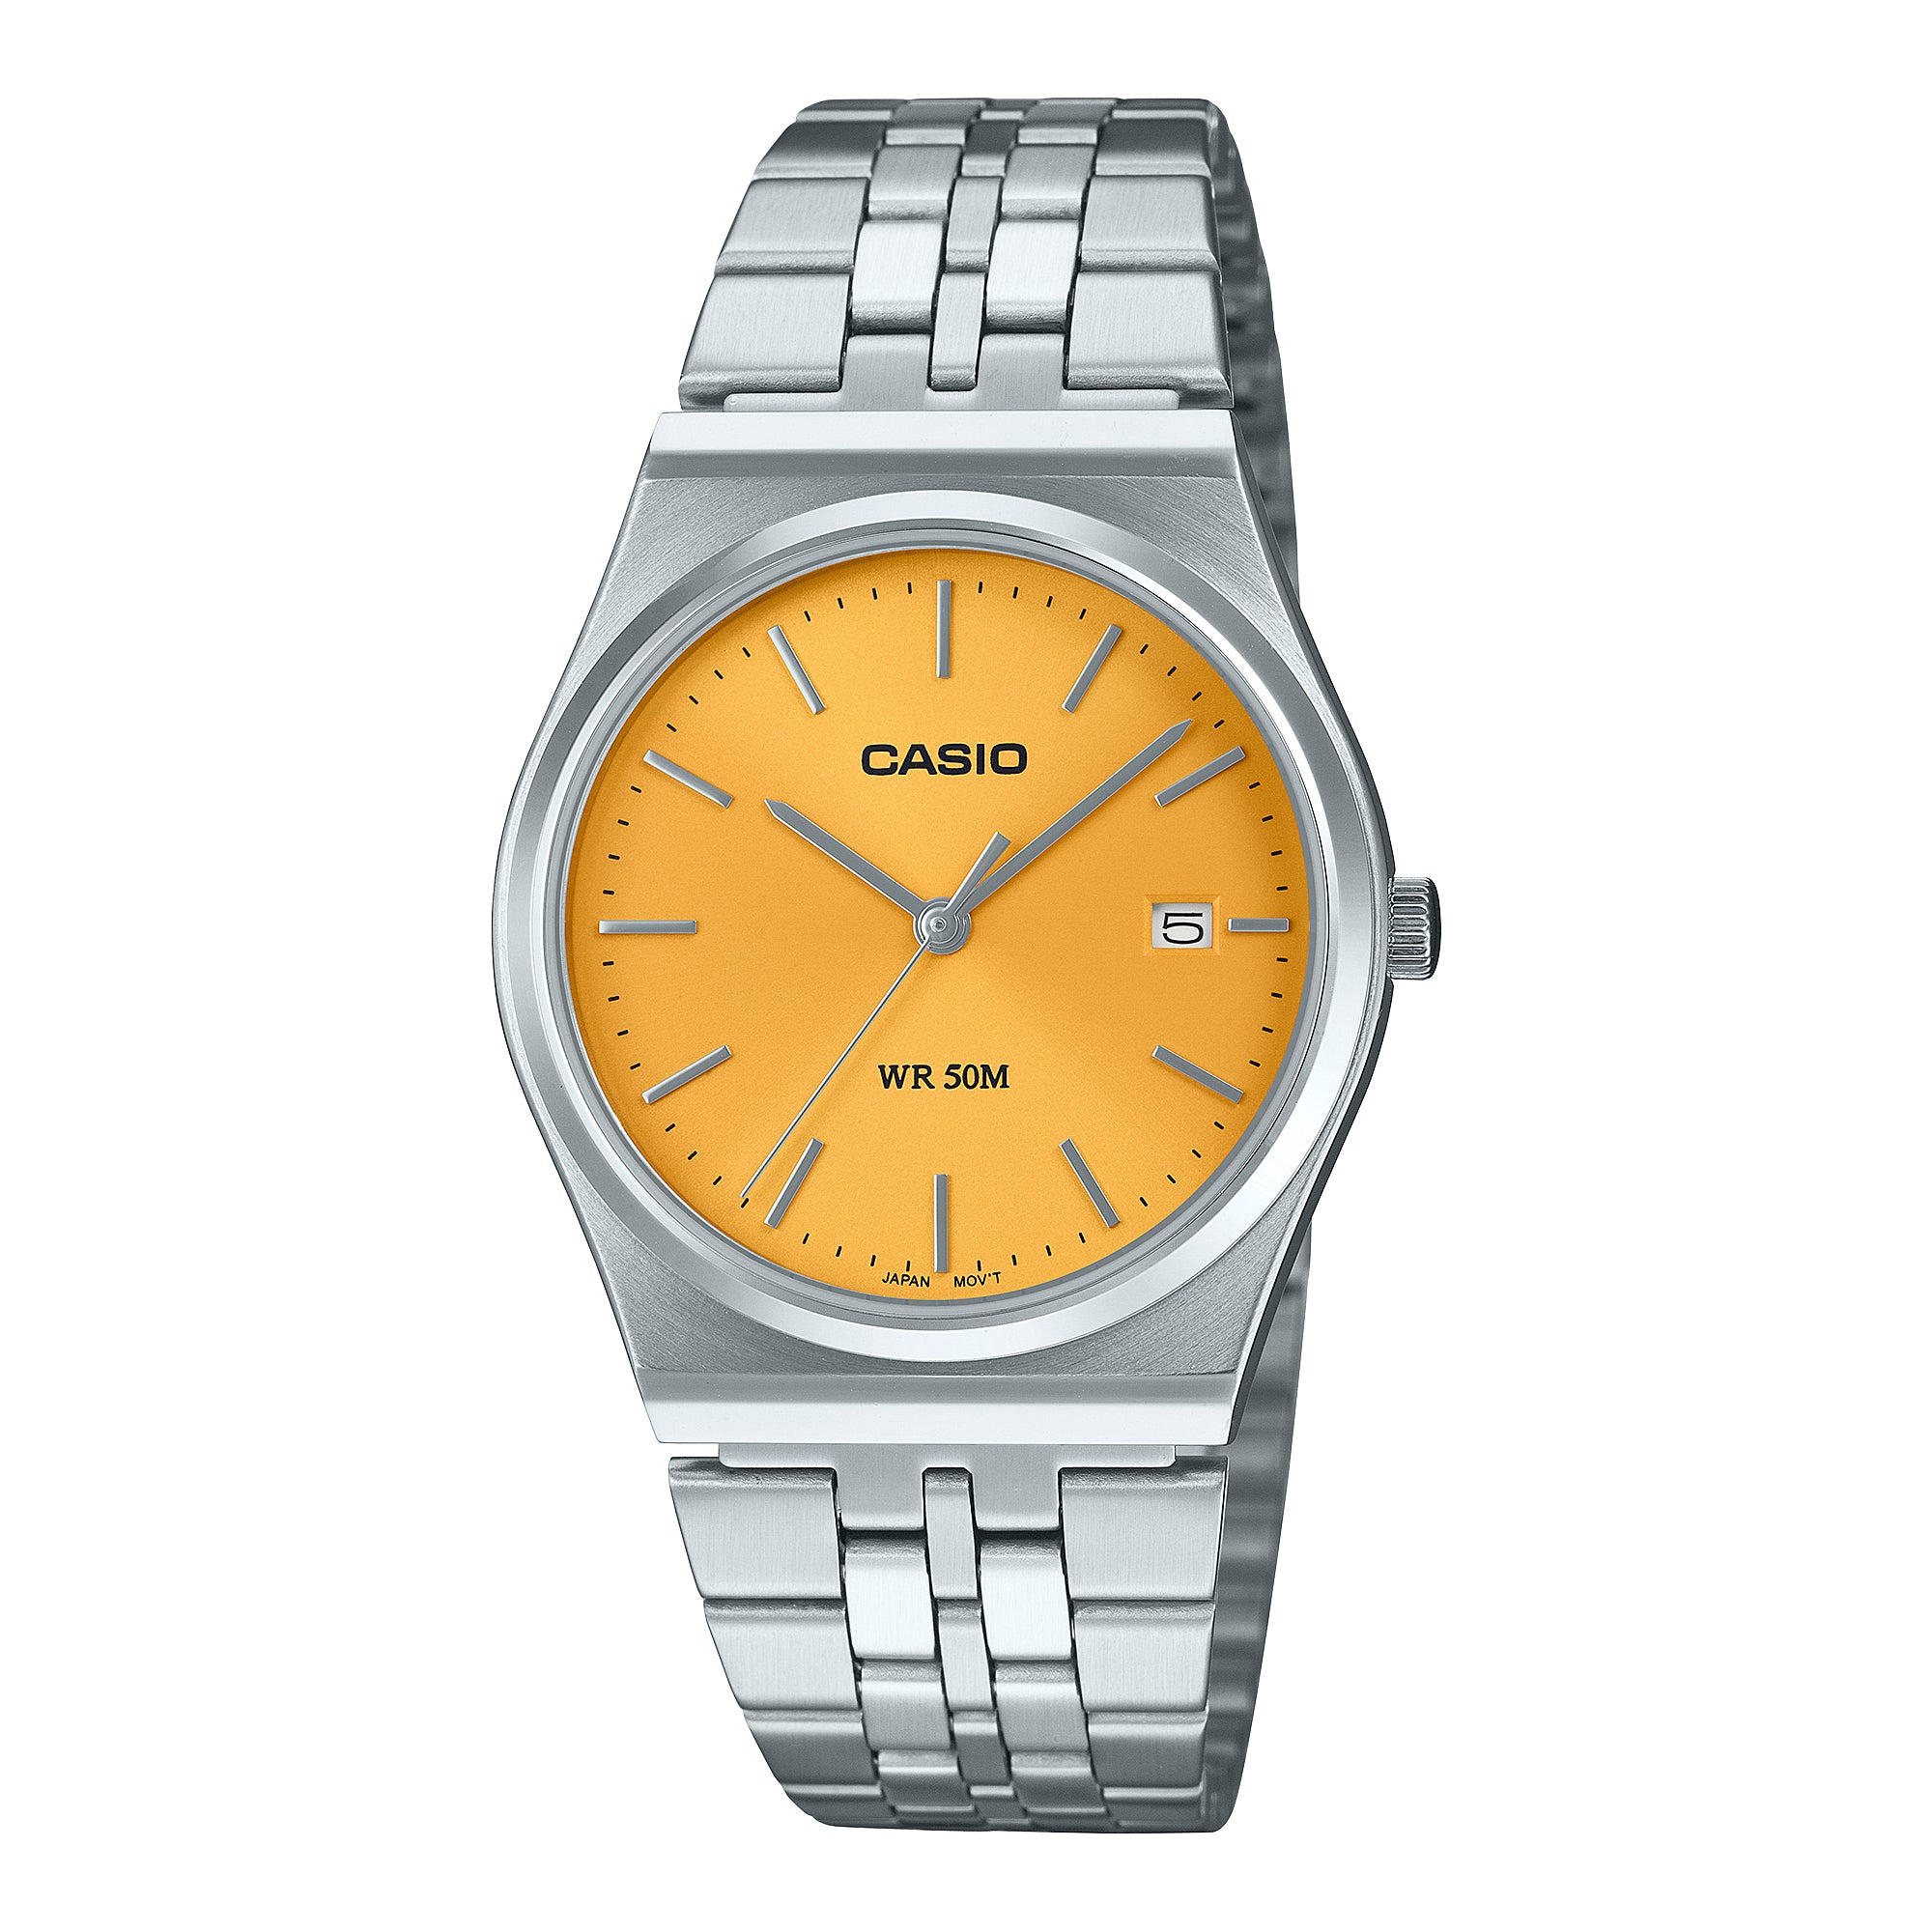 Casio Men's Analog Retro Look Minimalist Dial Watch MTPB145D-9A MTP-B145D-9A